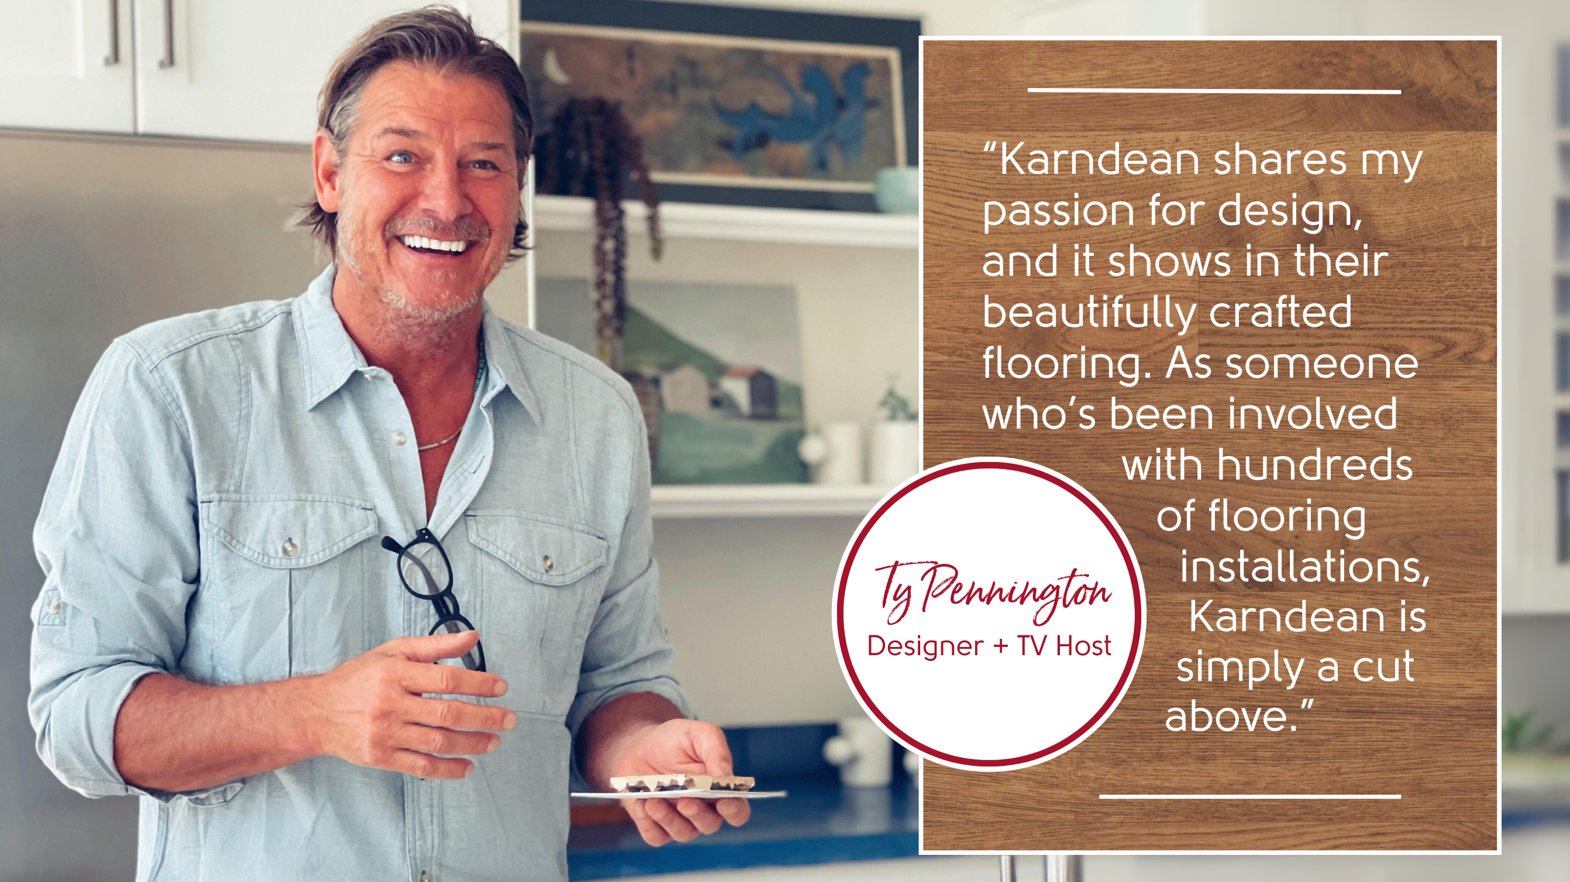 Ty Pennington, HGTV host and designer, on working with Karndean